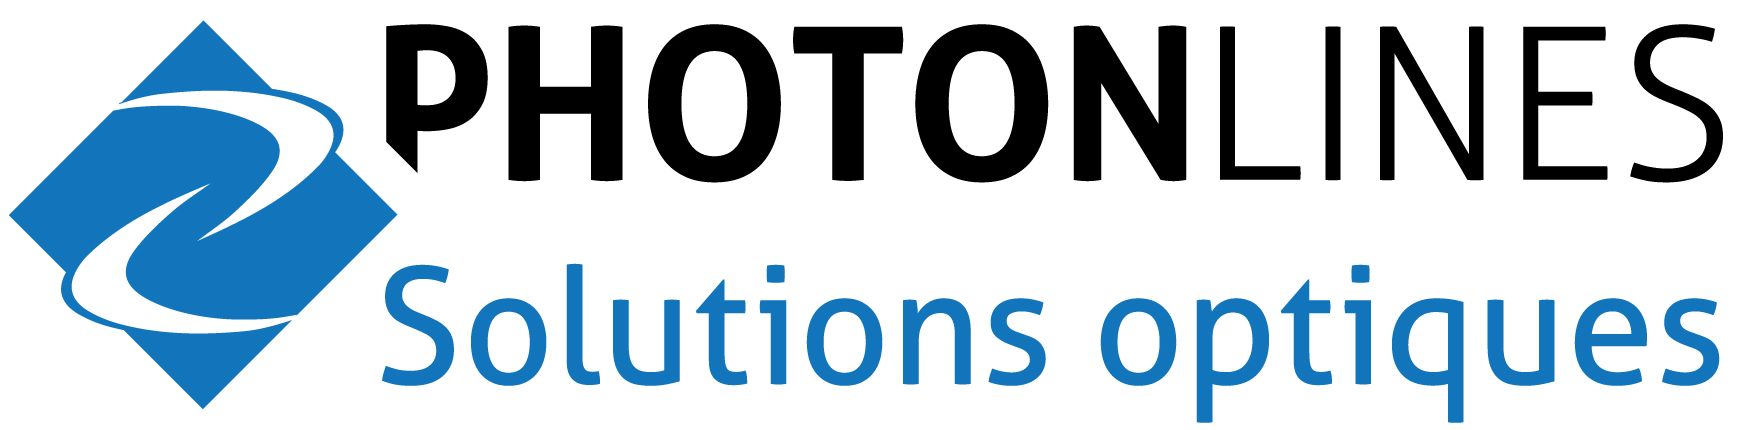 logo-photonlines-solutions-optiques-limite.jpg